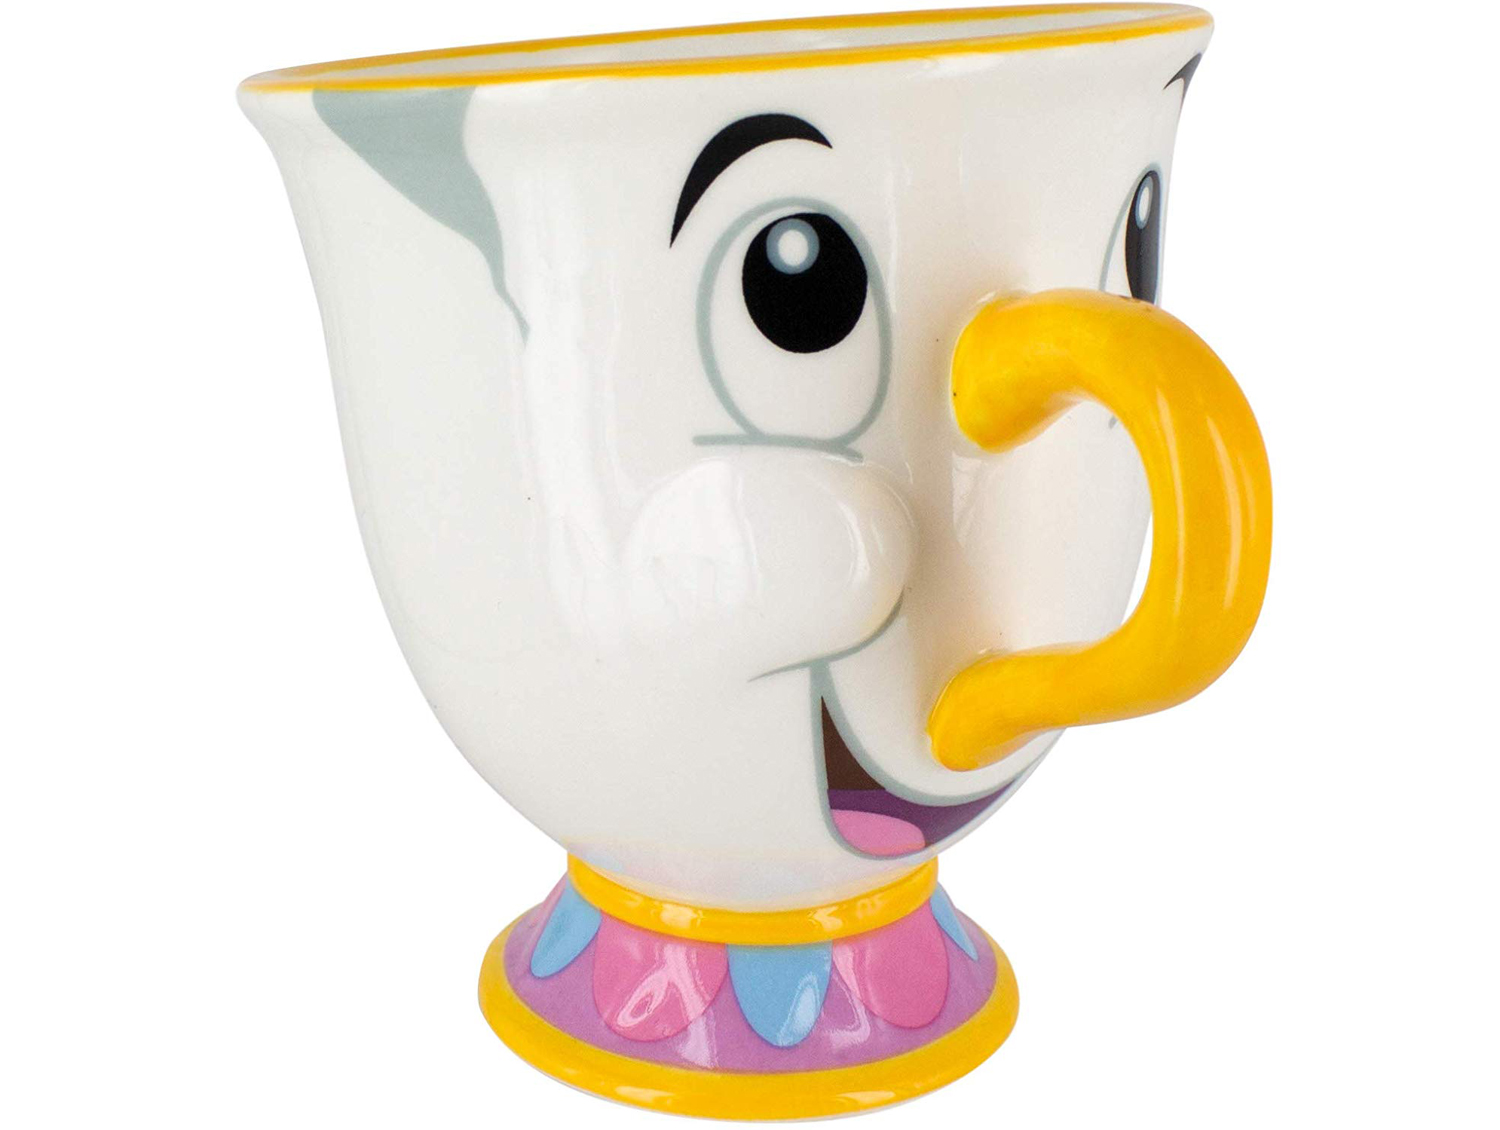 
                                    
                                Tazza mug, le più originali per una pausa caffè (o tè) davvero top